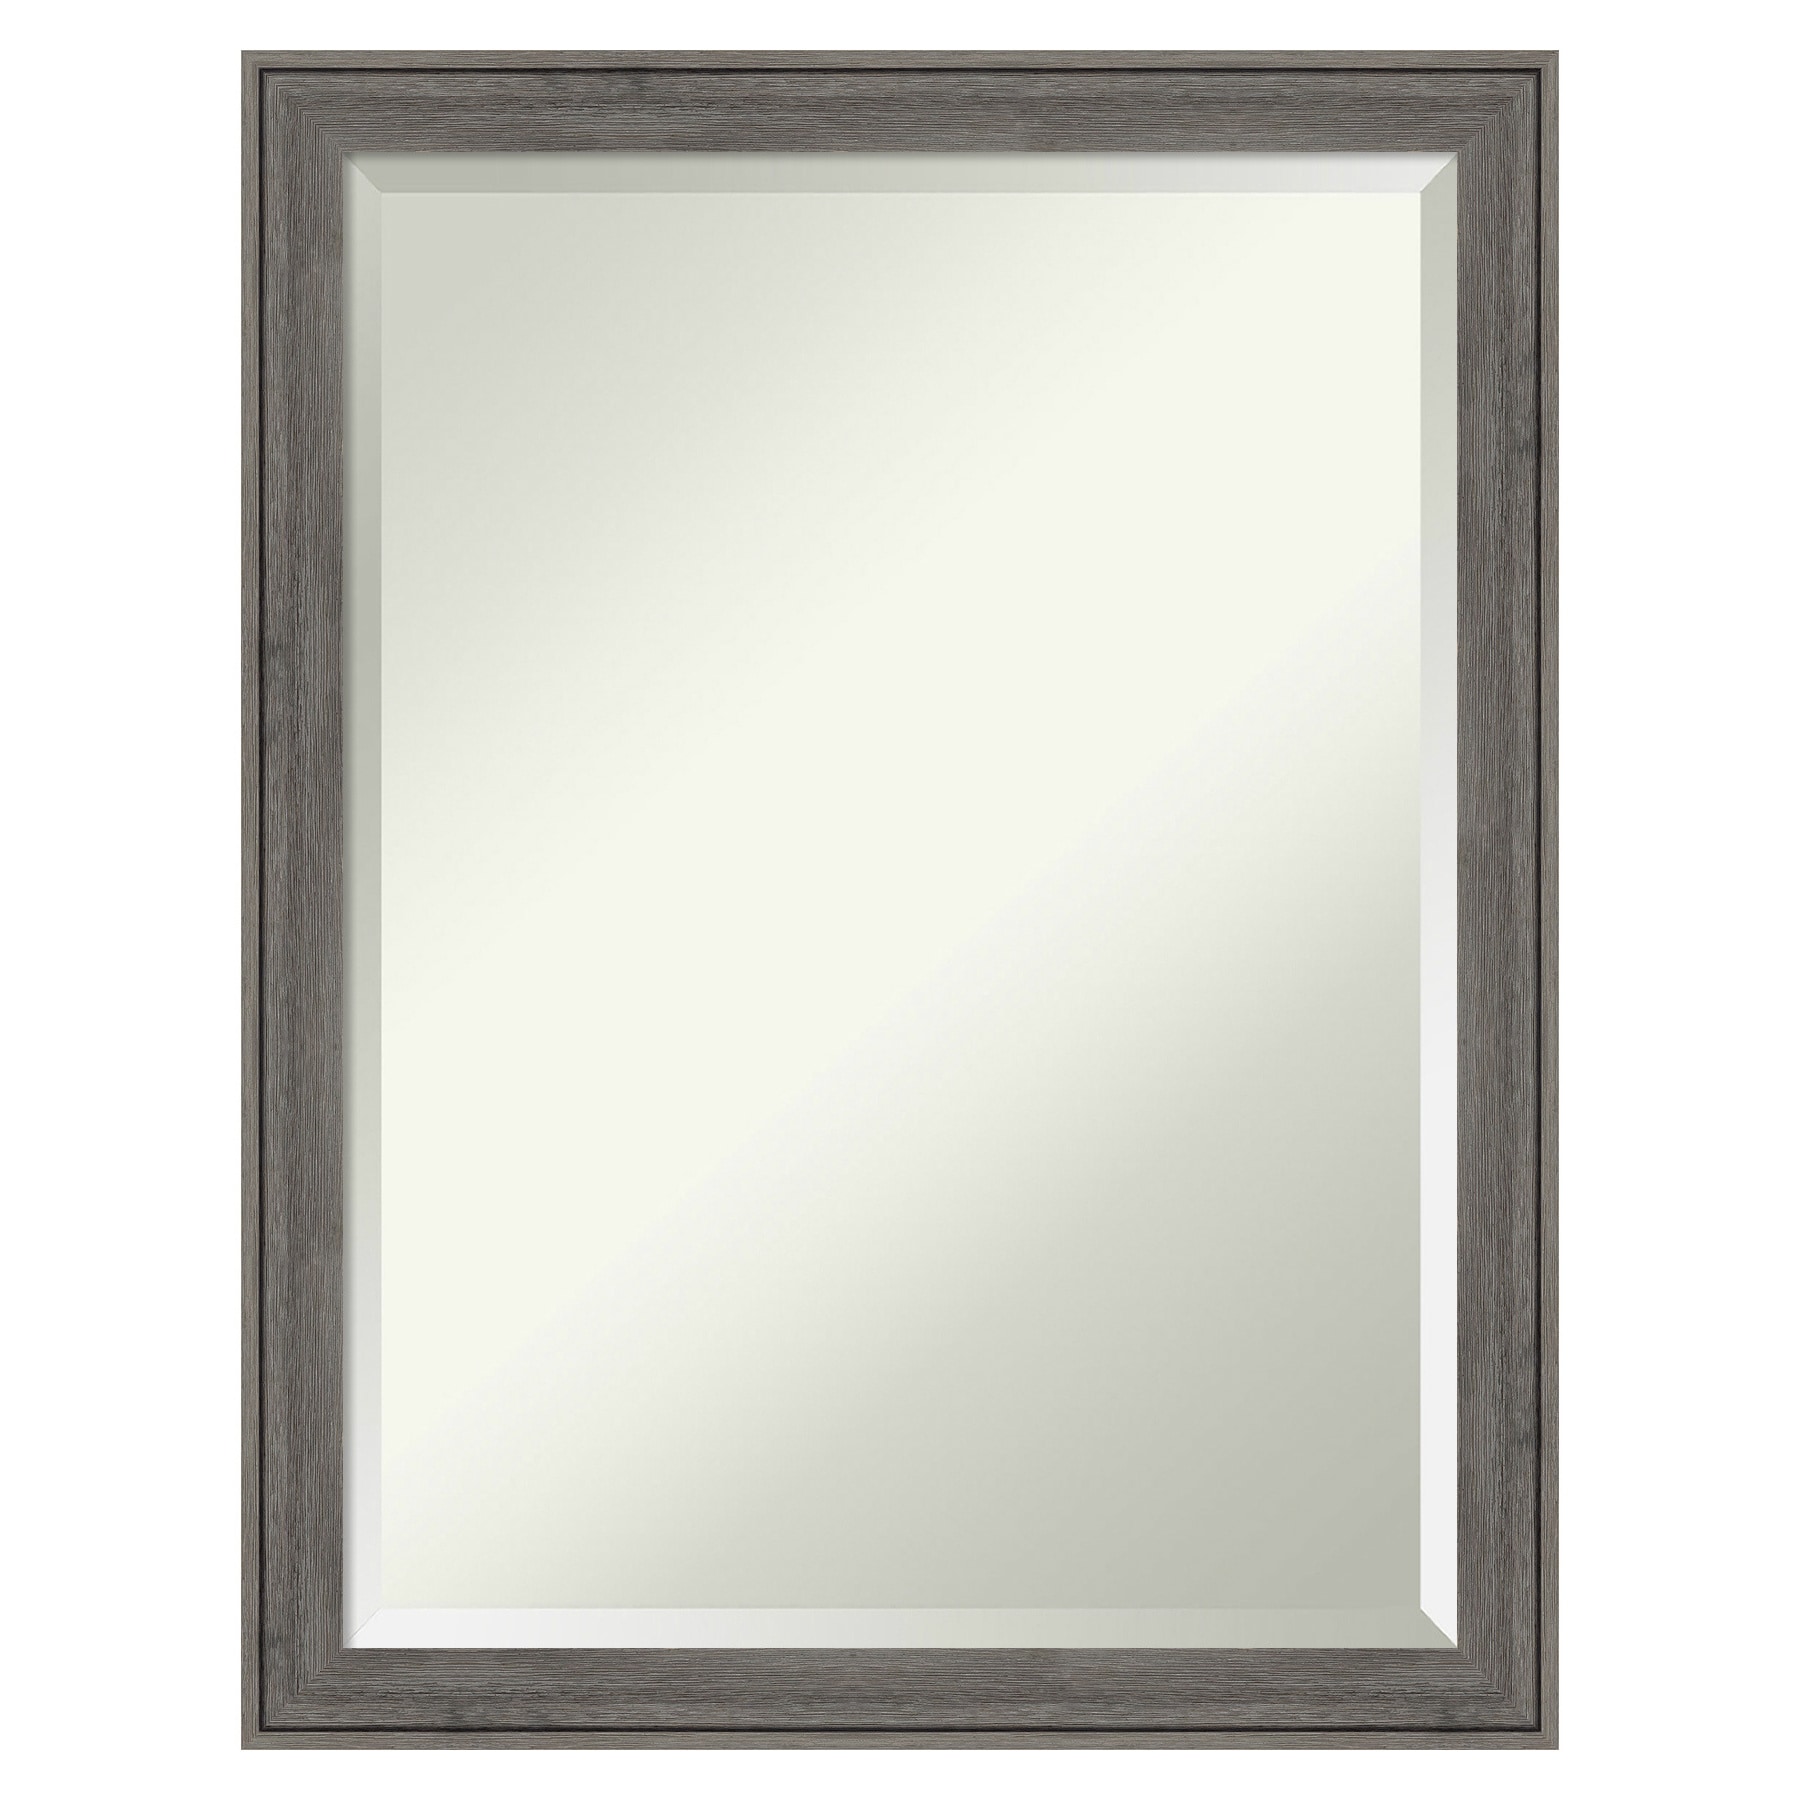 Amanti Art Regis Barnwood 20.62 in. x 26.62 in. Rustic Rectangle Framed Grey Narrow Bathroom Vanity Wall Mirror Matte Grey